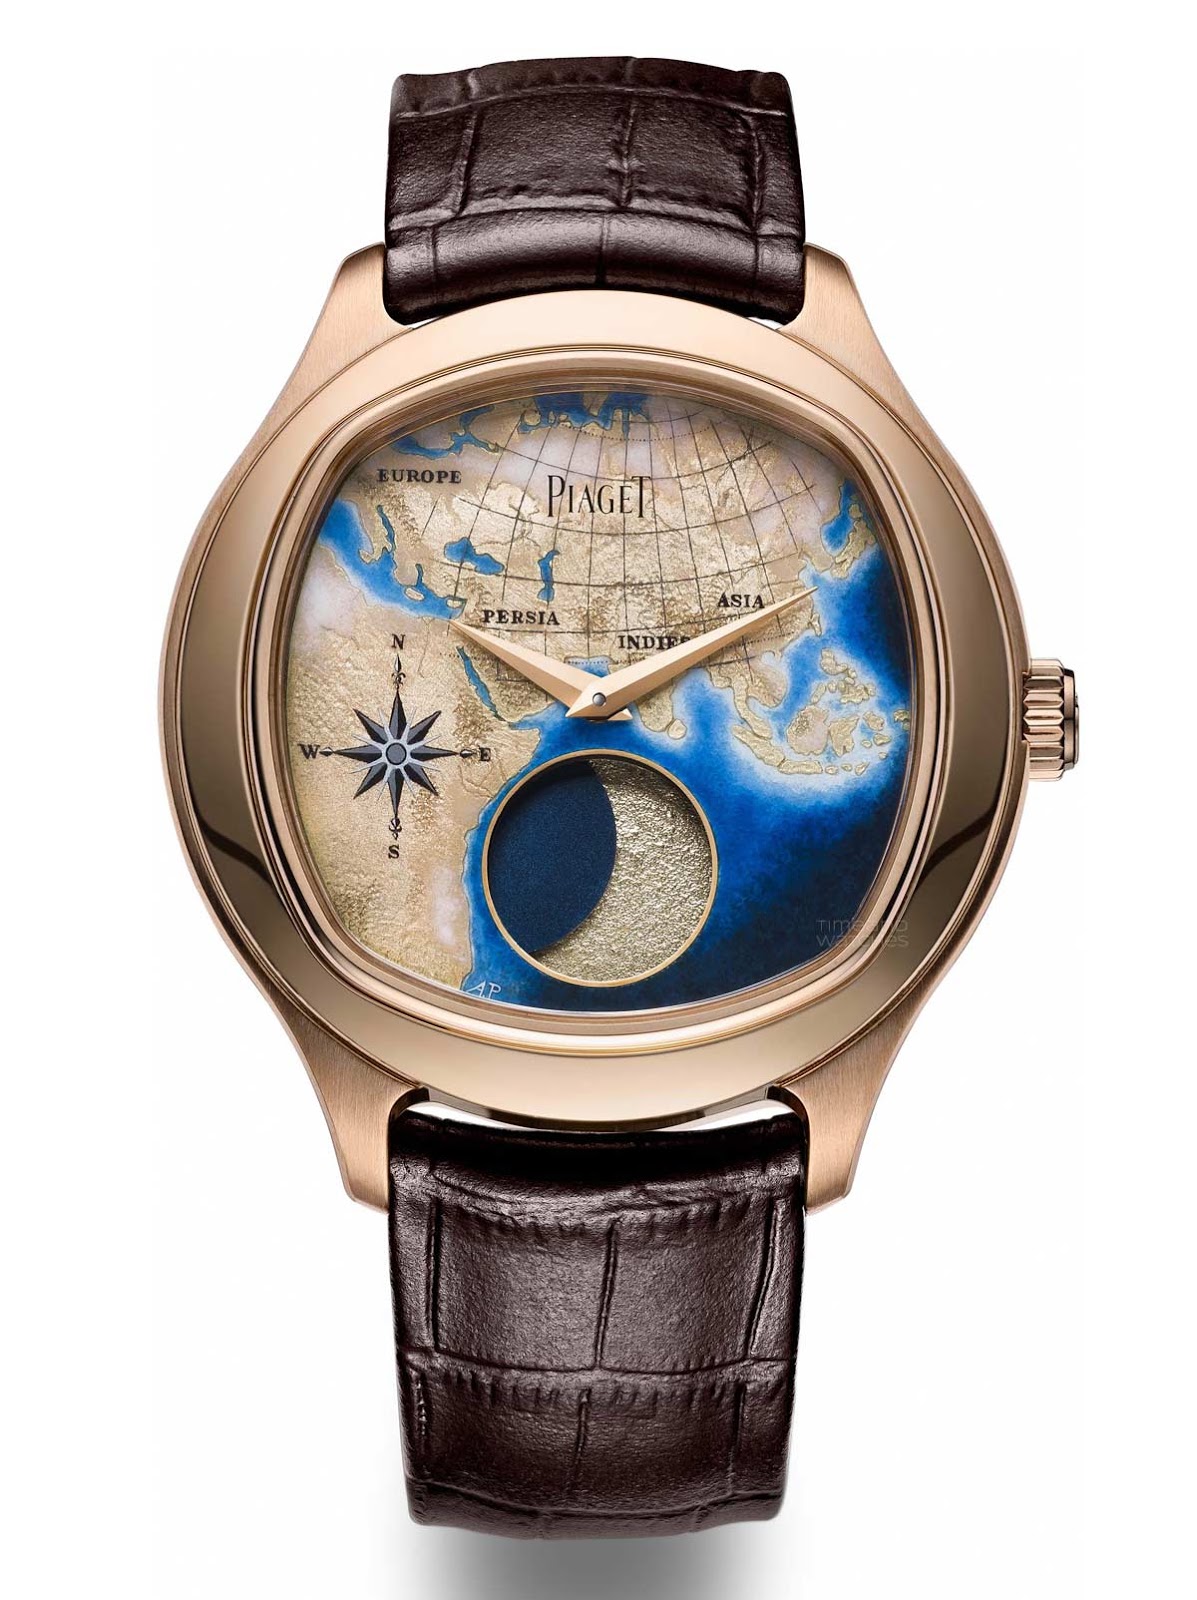 Watch Review-Piaget Emperador Coussin XL Lune Astronomique Watch